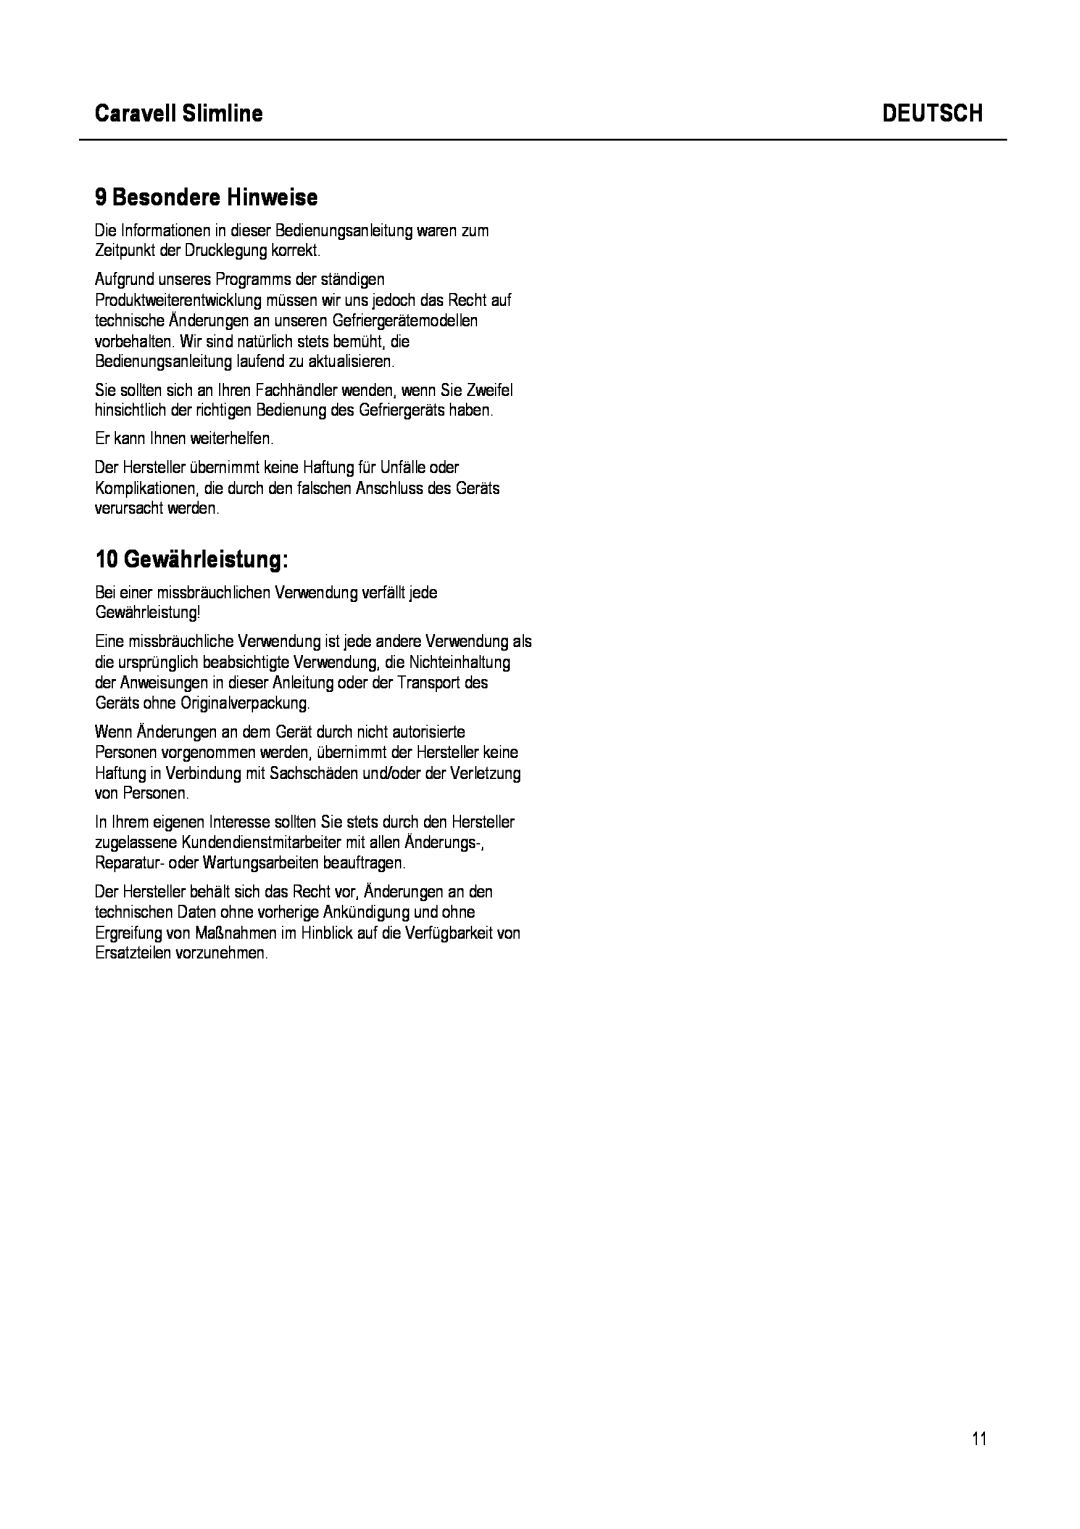 Caravell SLC 168 instruction manual Besondere Hinweise, 10 Gewährleistung, Caravell Slimline, Deutsch 